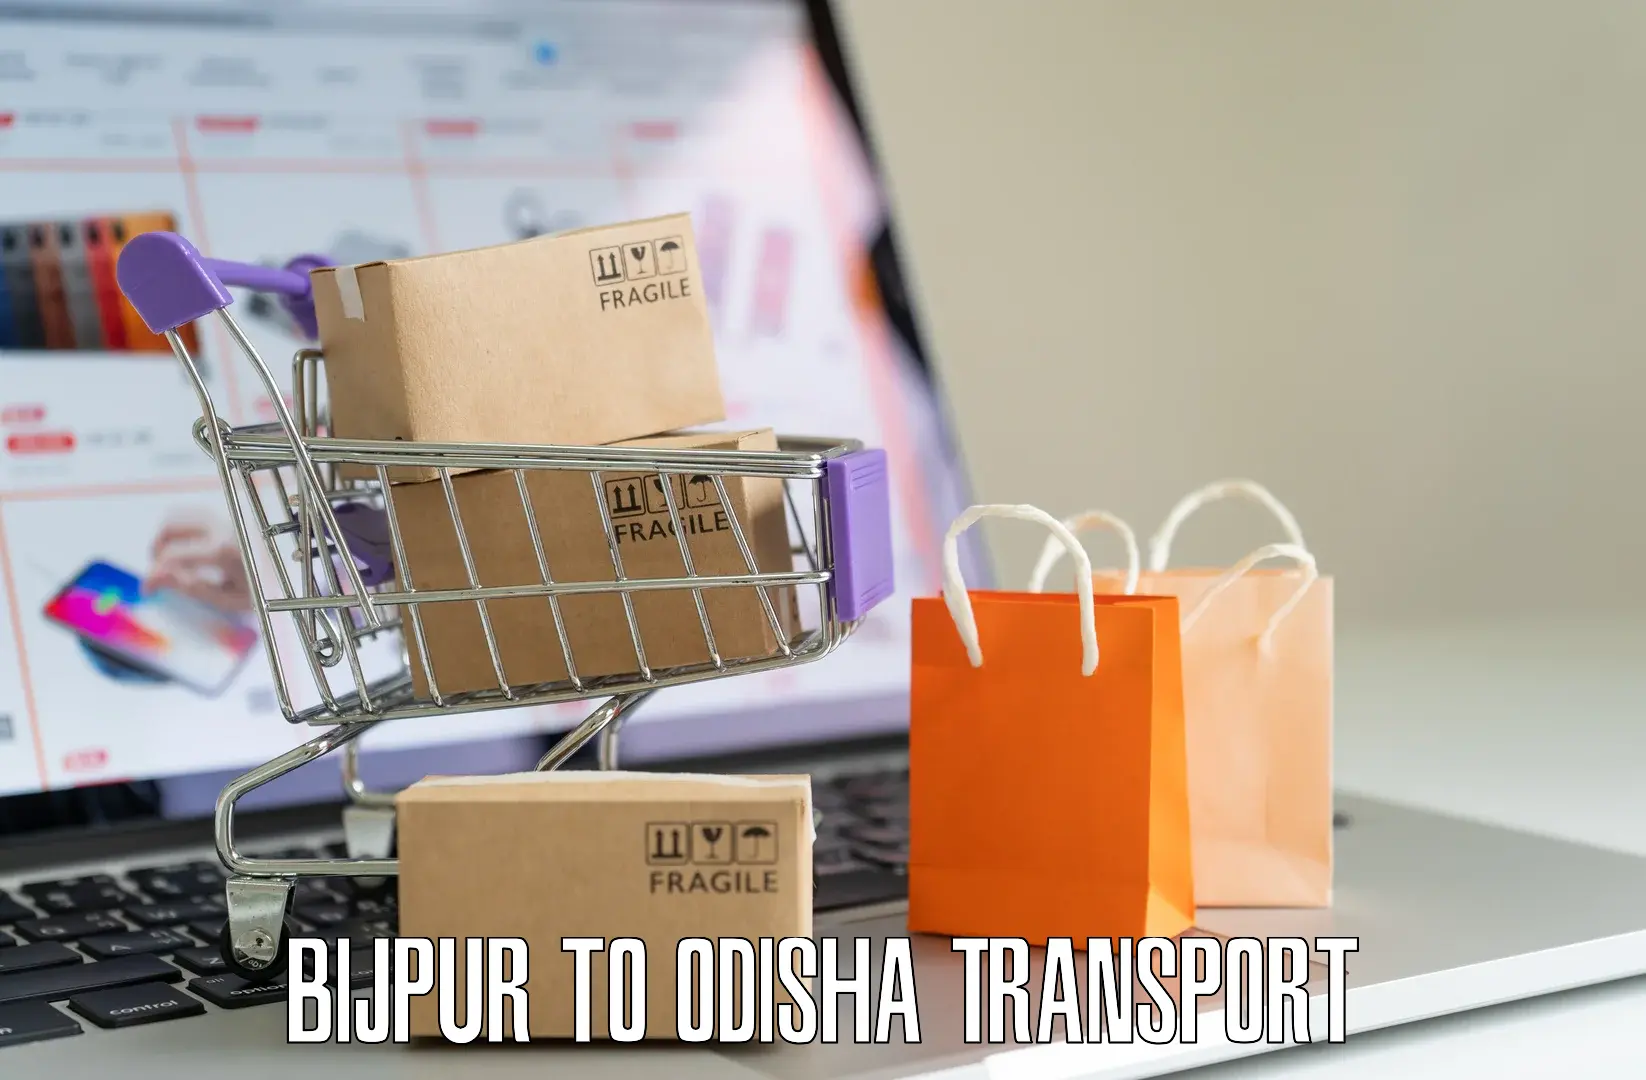 Vehicle transport services Bijpur to Chandikhol